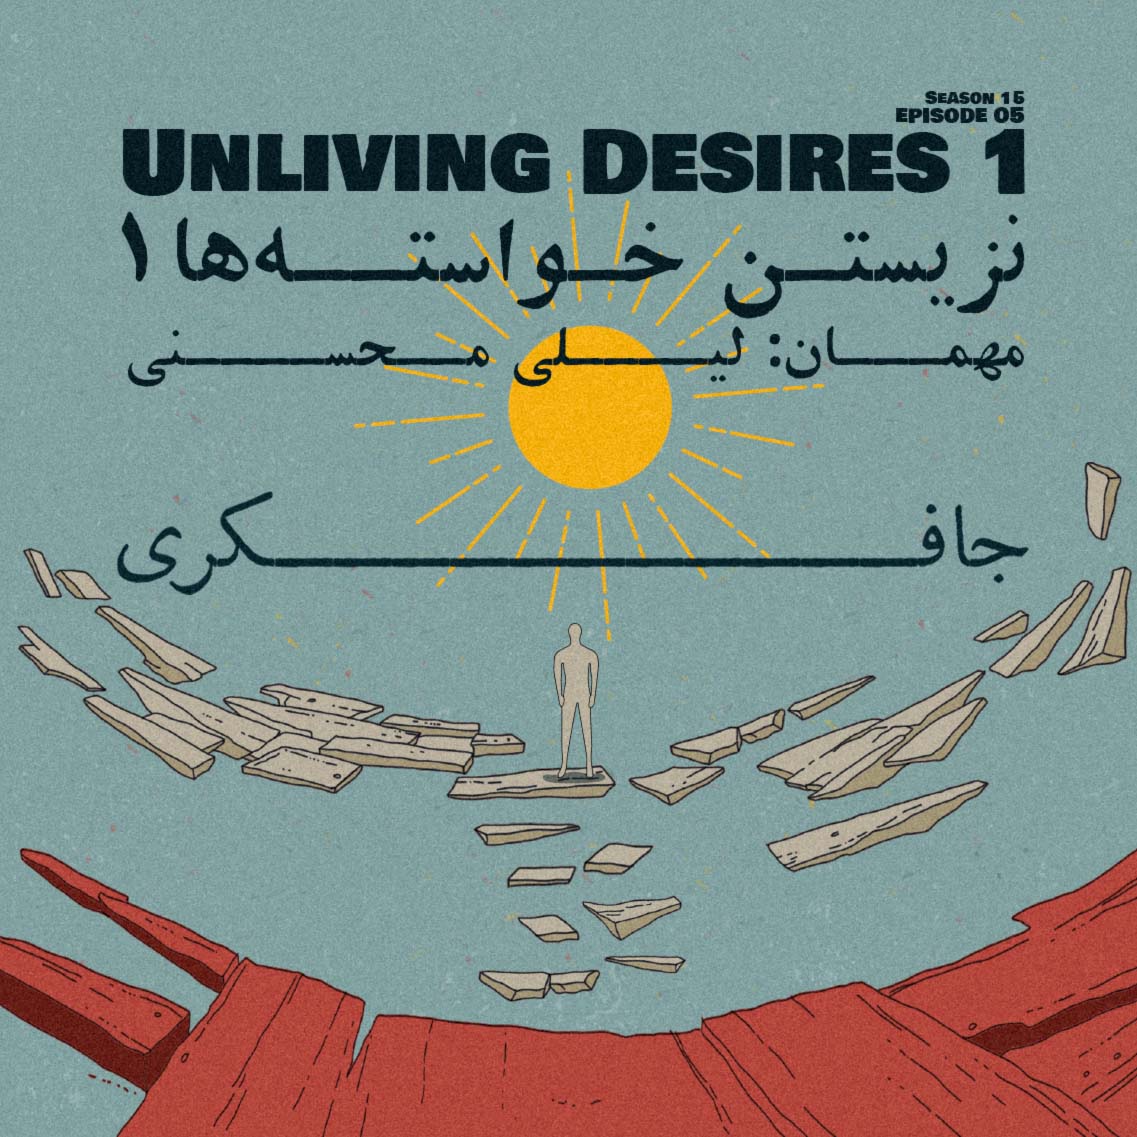 Episode 05 - Unliving desires (نزیستن خواسته ها)